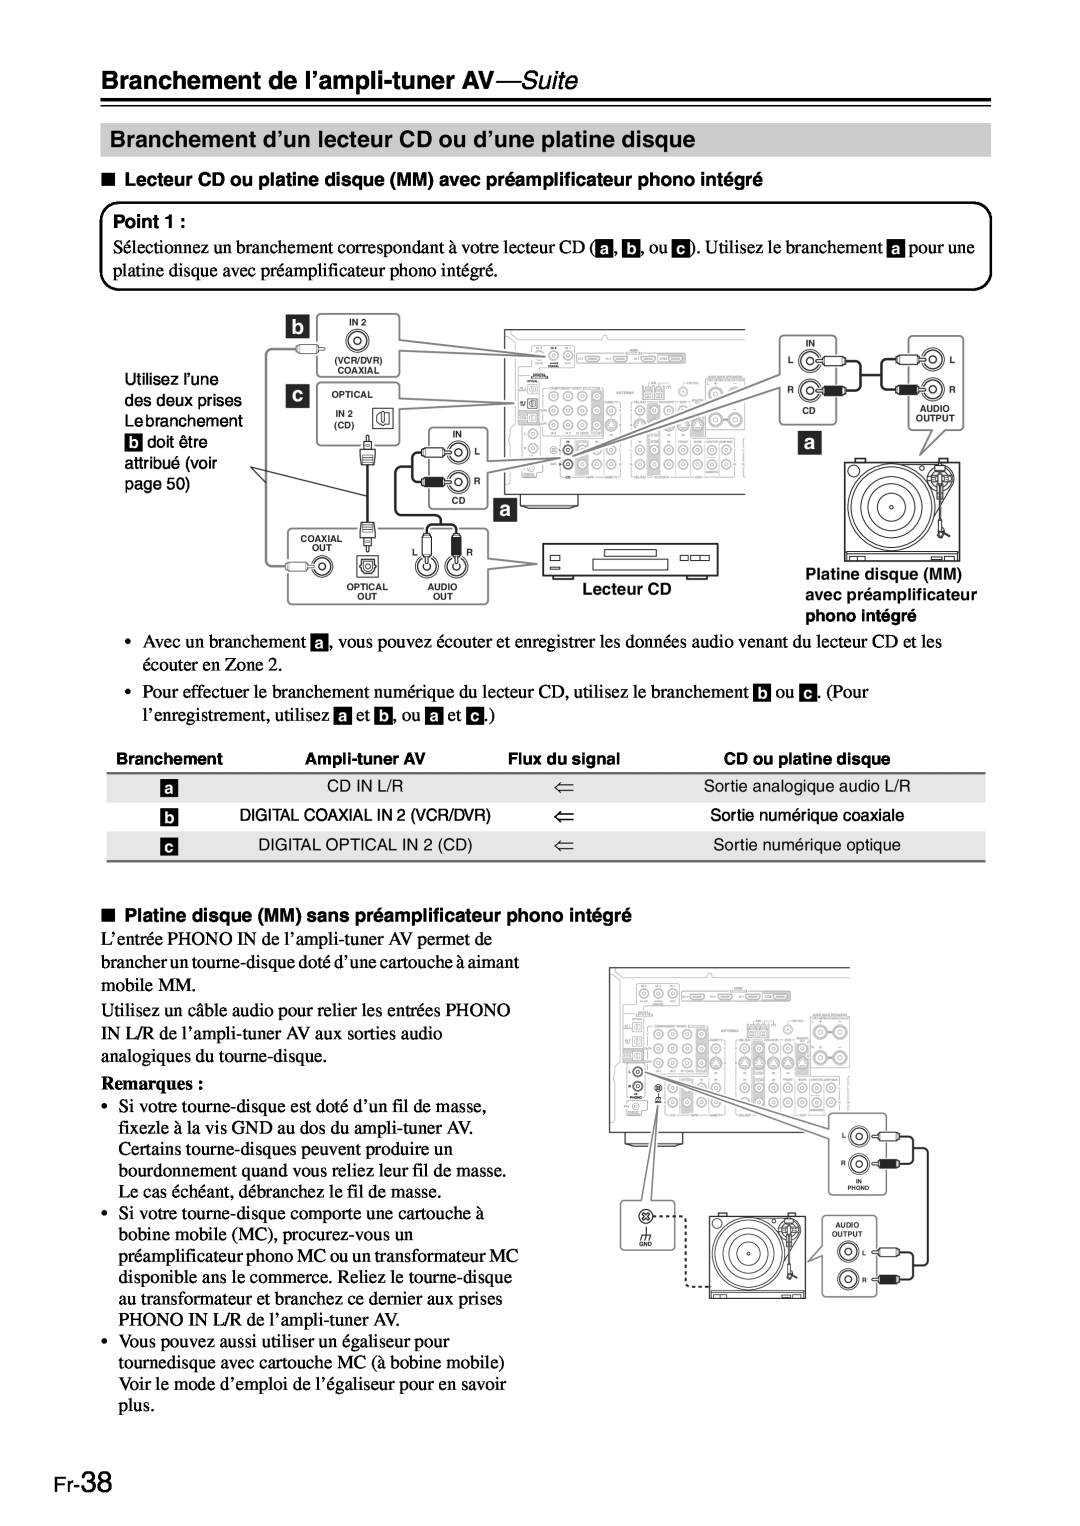 Onkyo TX-SR705 manual Fr-38, Branchement de l’ampli-tuner AV-Suite, Remarques 